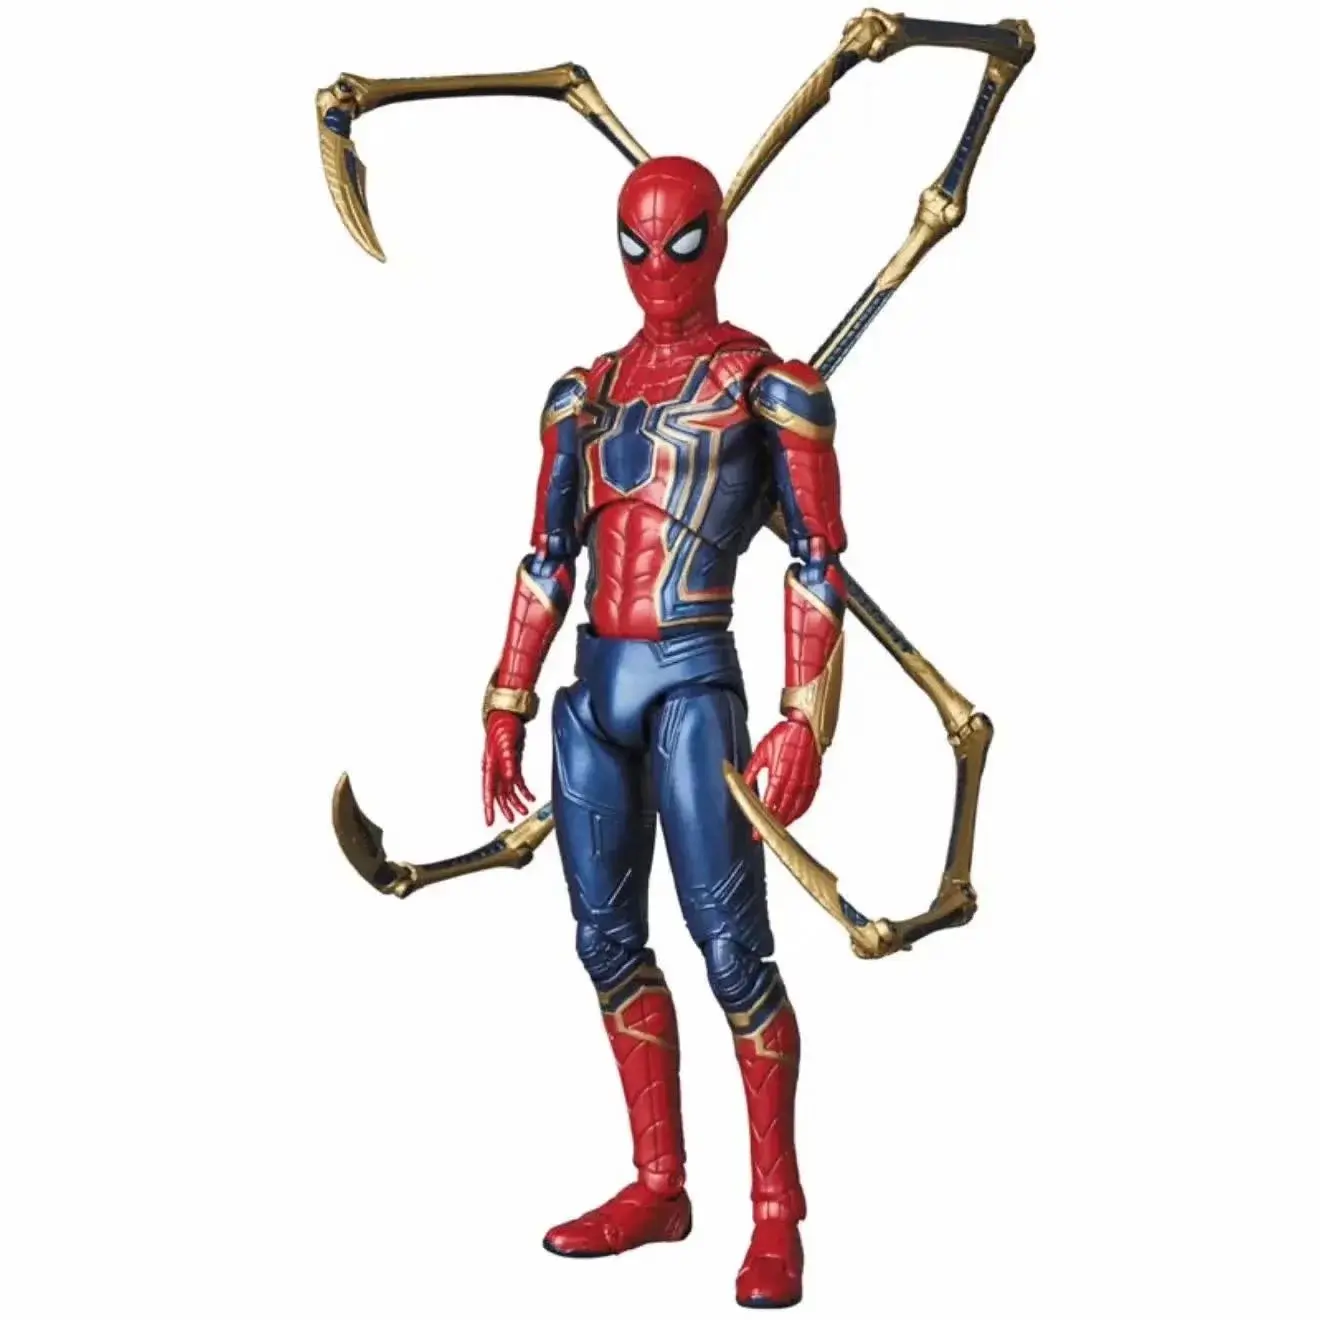 Spiderman Action Figures Marvel Legends Spiderman attraverso il ragno versetto Action Figures Miles Morales Spider-Man